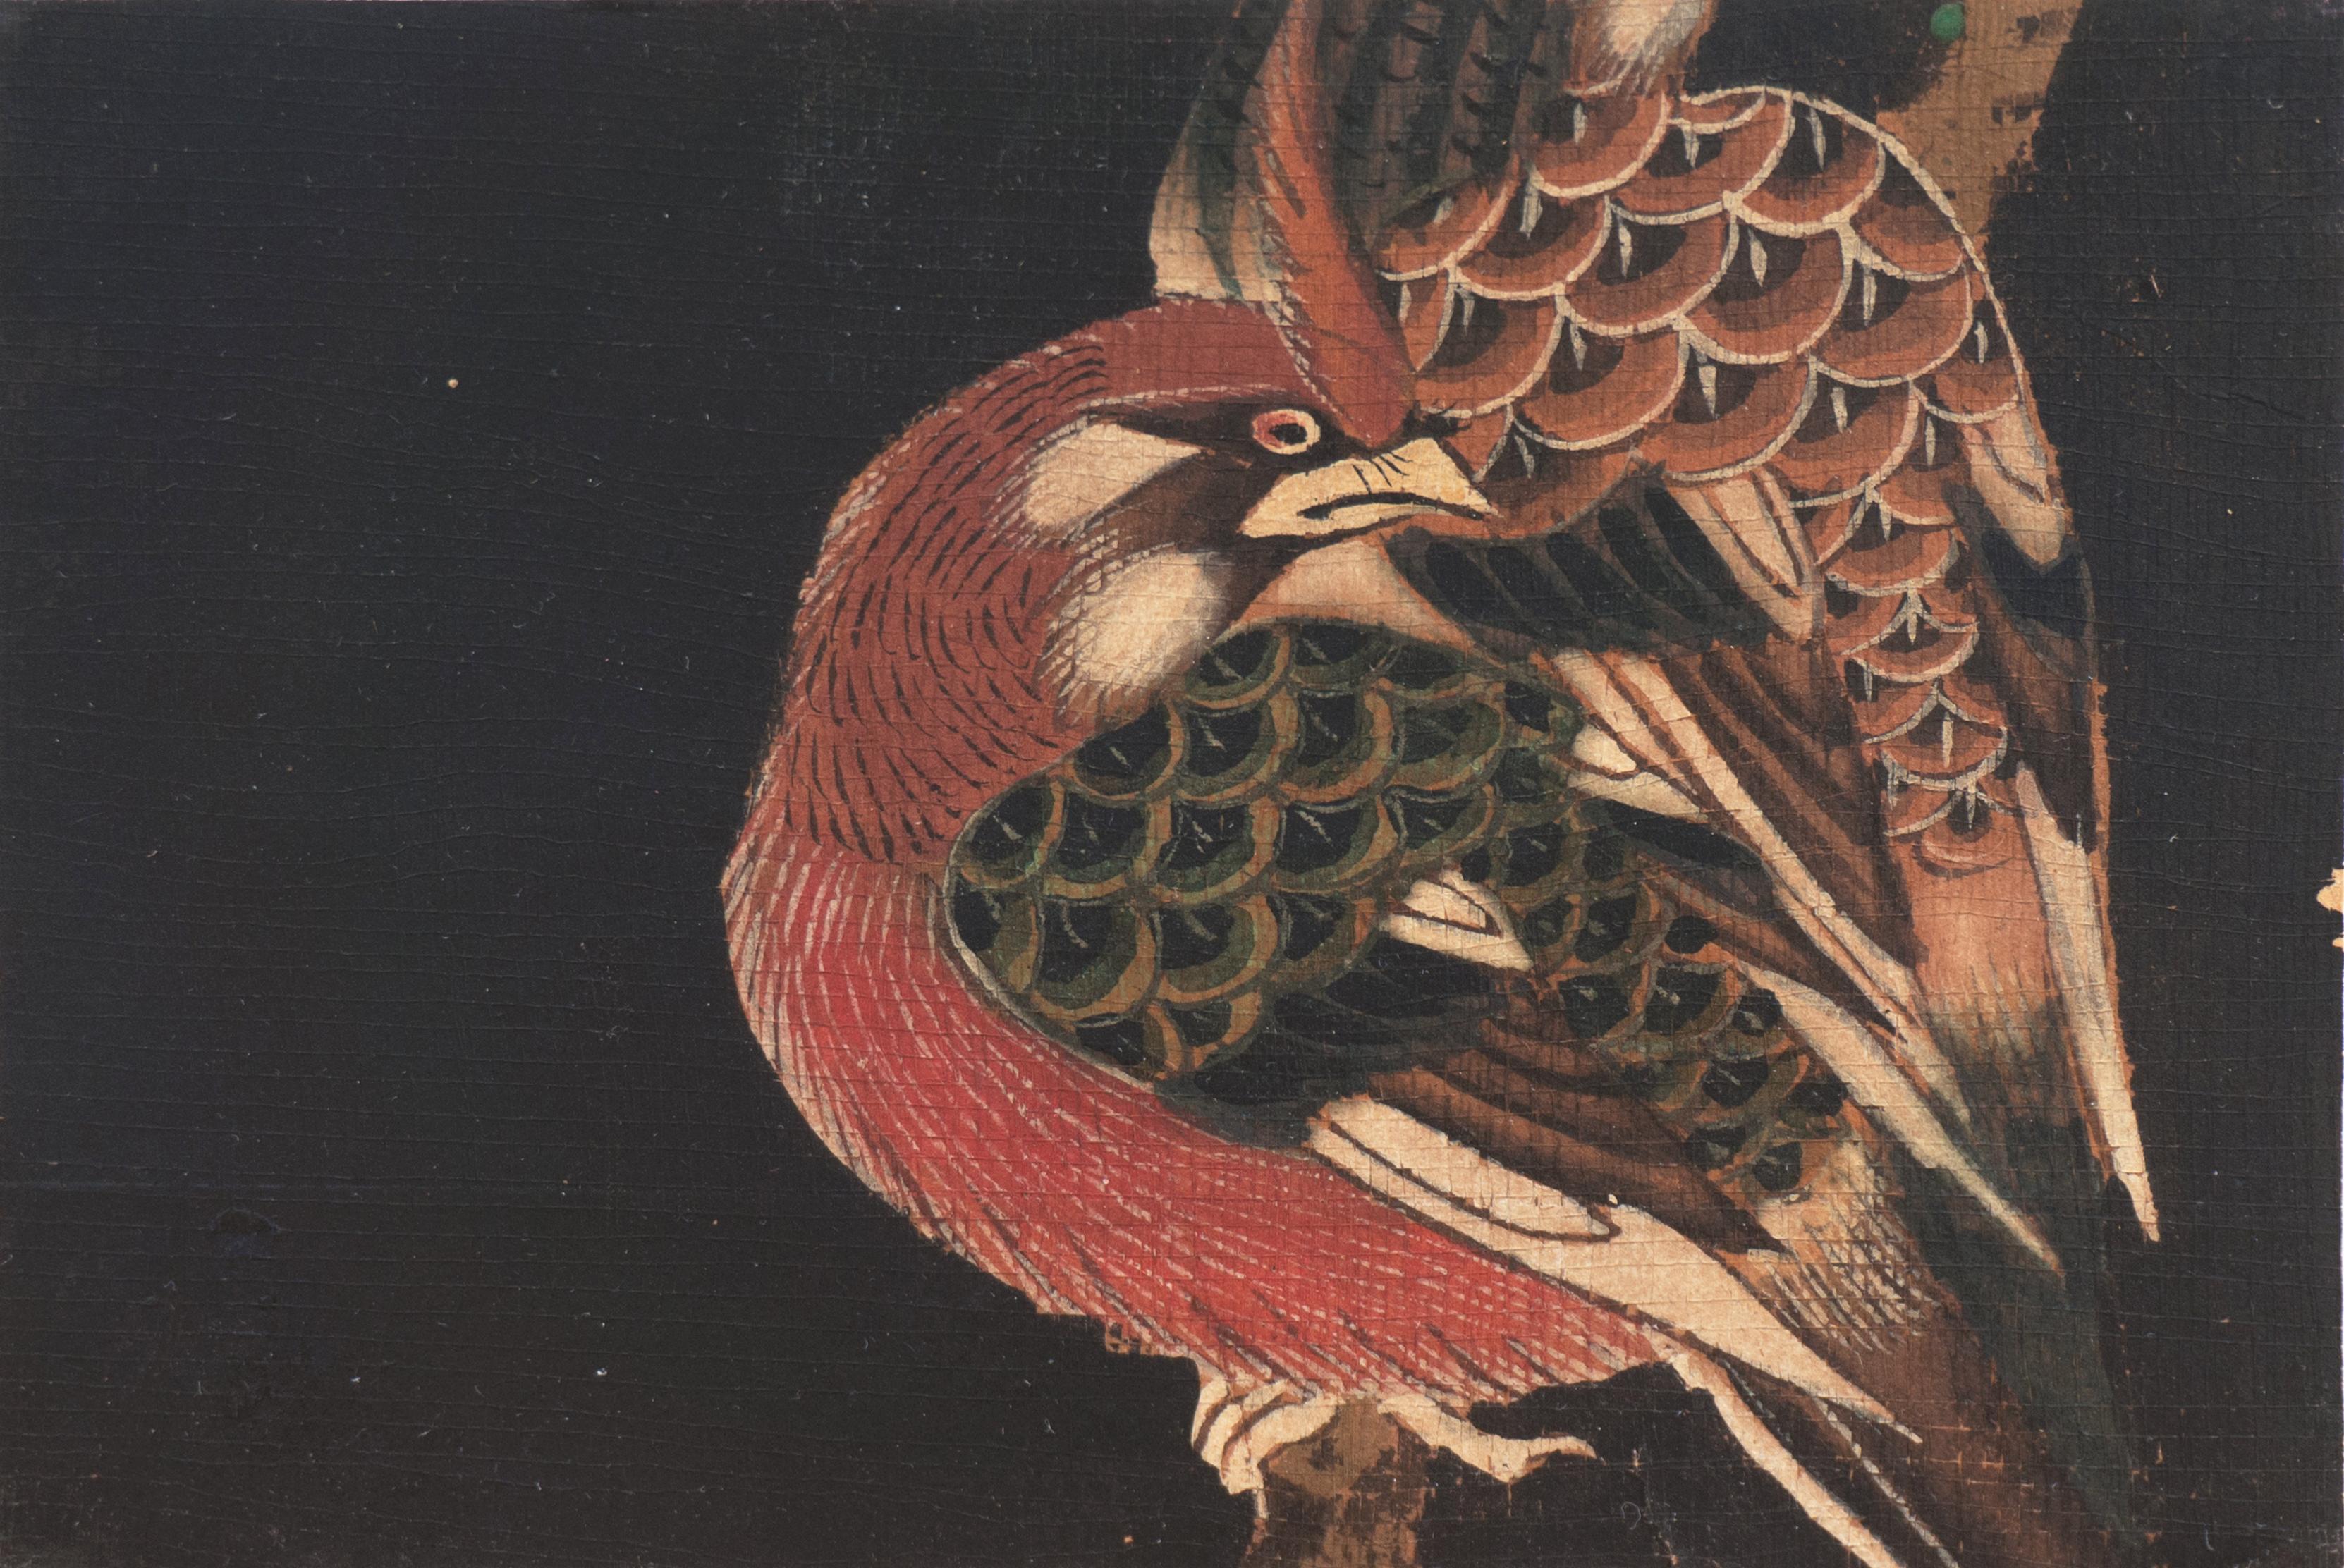 'Bird of Paradise', 19th Century Chinese School - Brown Animal Art by 19th Century Chinese school